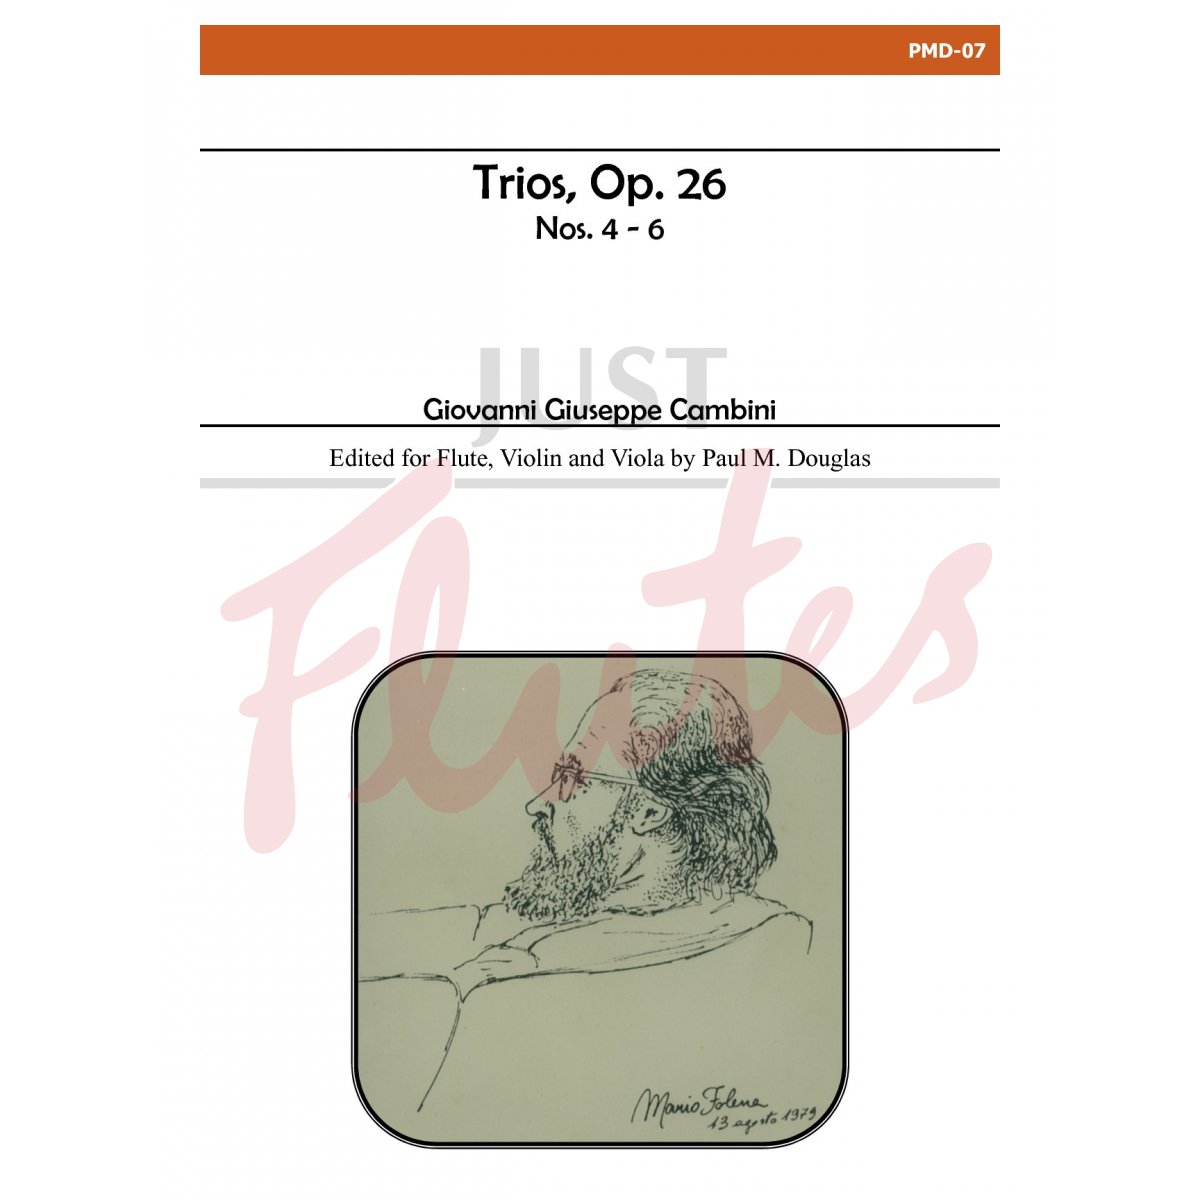 Trios, Op. 26, Nos 4-6 for Flute, Violin and Viola